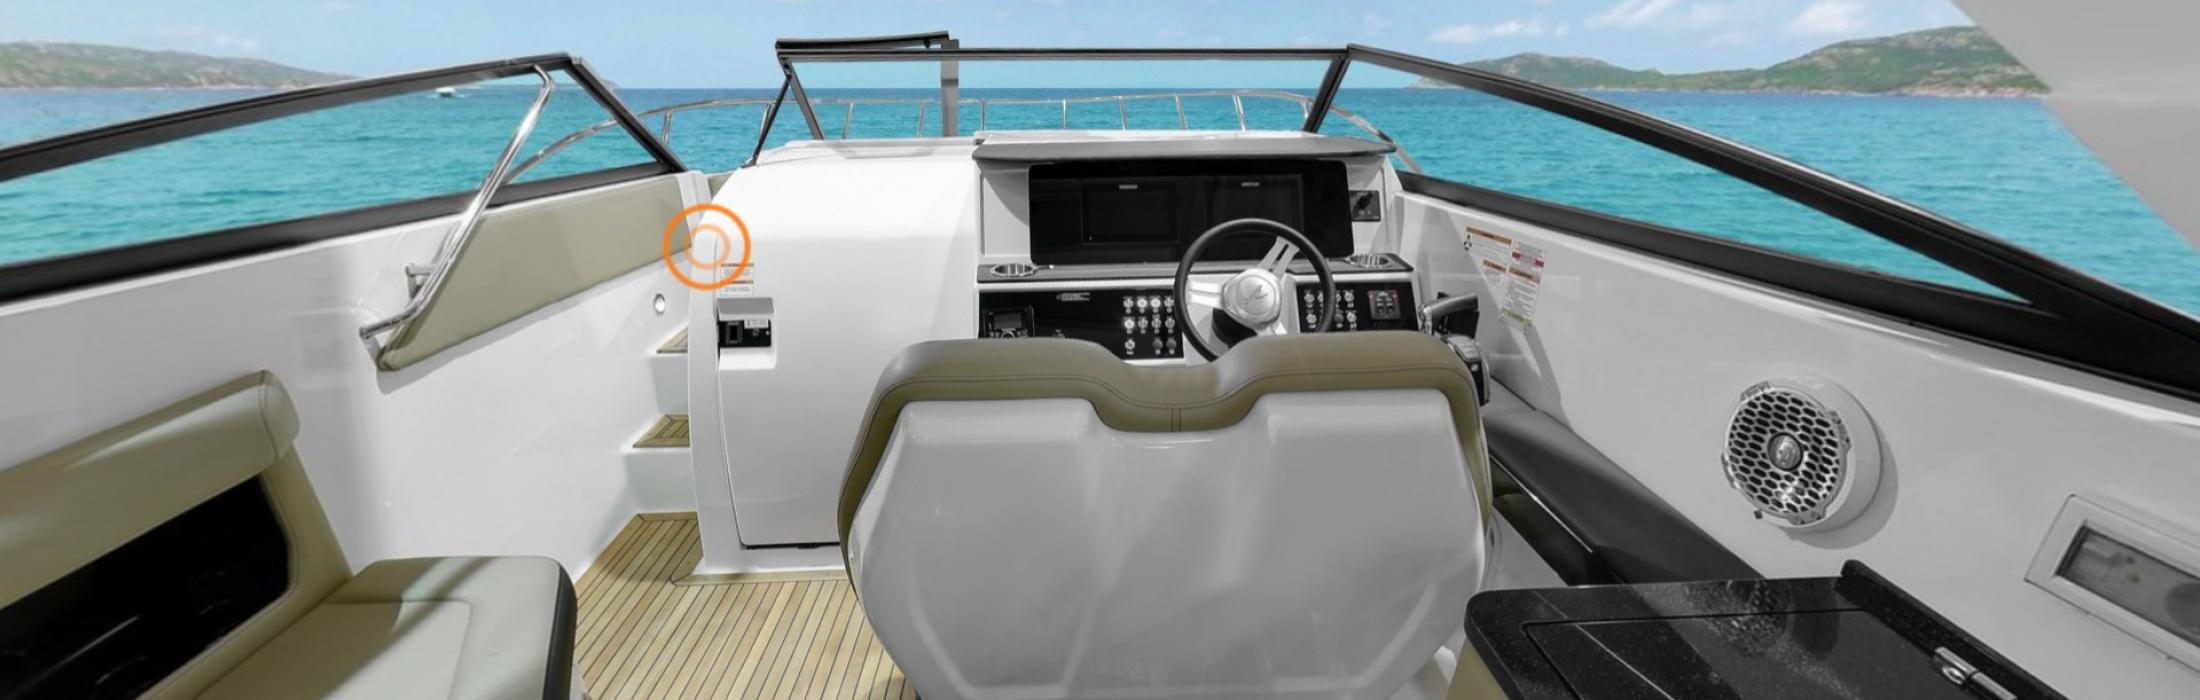 Virtual tours Sea Ray : découvrez le Searay 250 SDX OB et le Searay 290 Sundancer